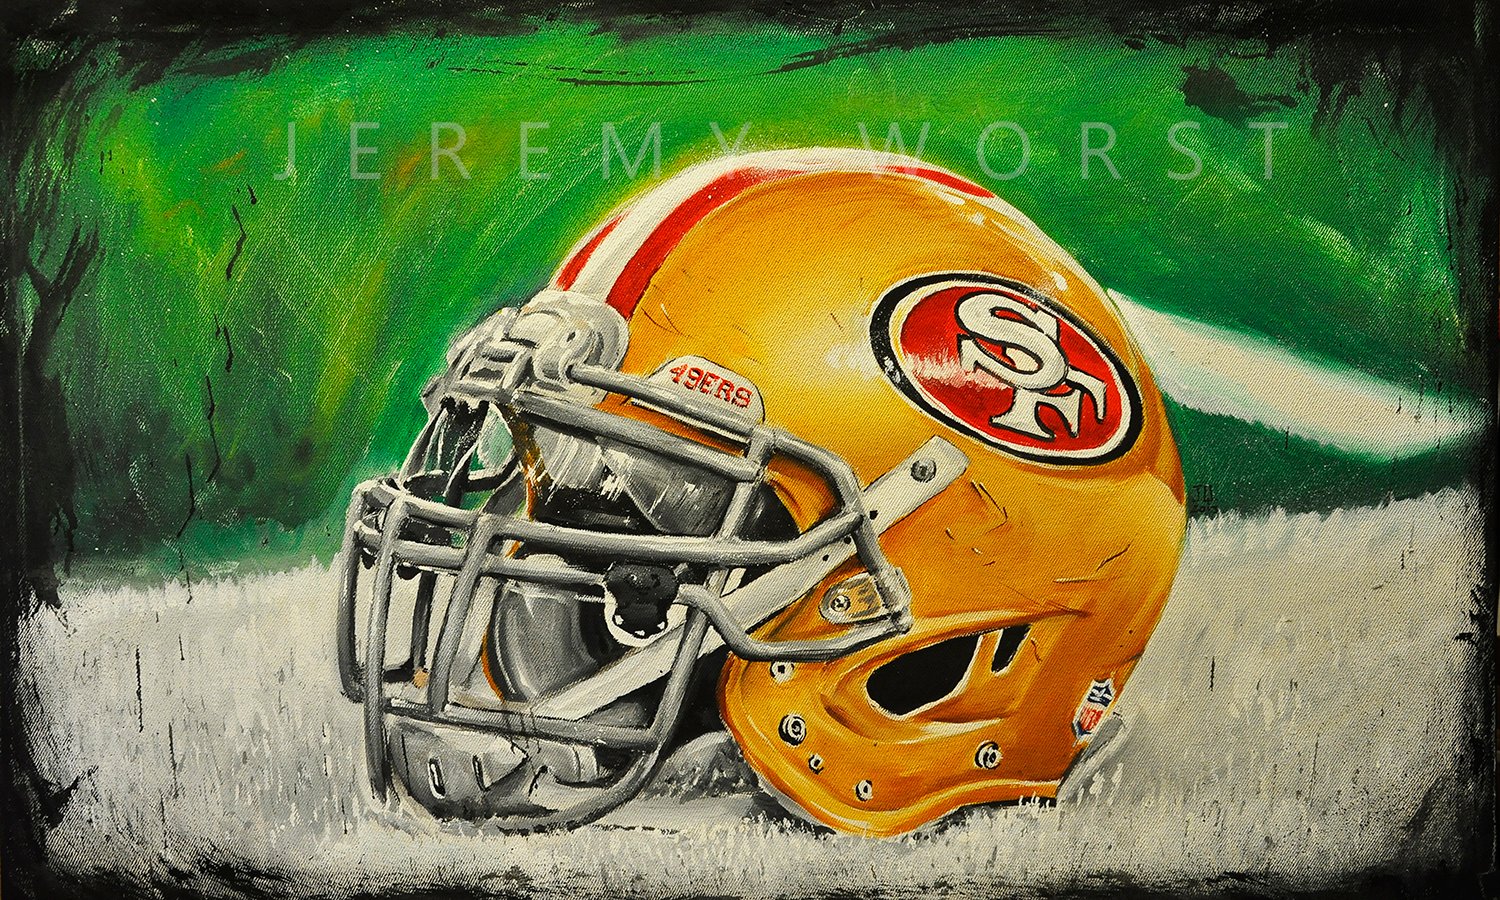 JEREMY WORST San fransico 49ers Painting Print Artwork helmet nfl football  helmet player sports